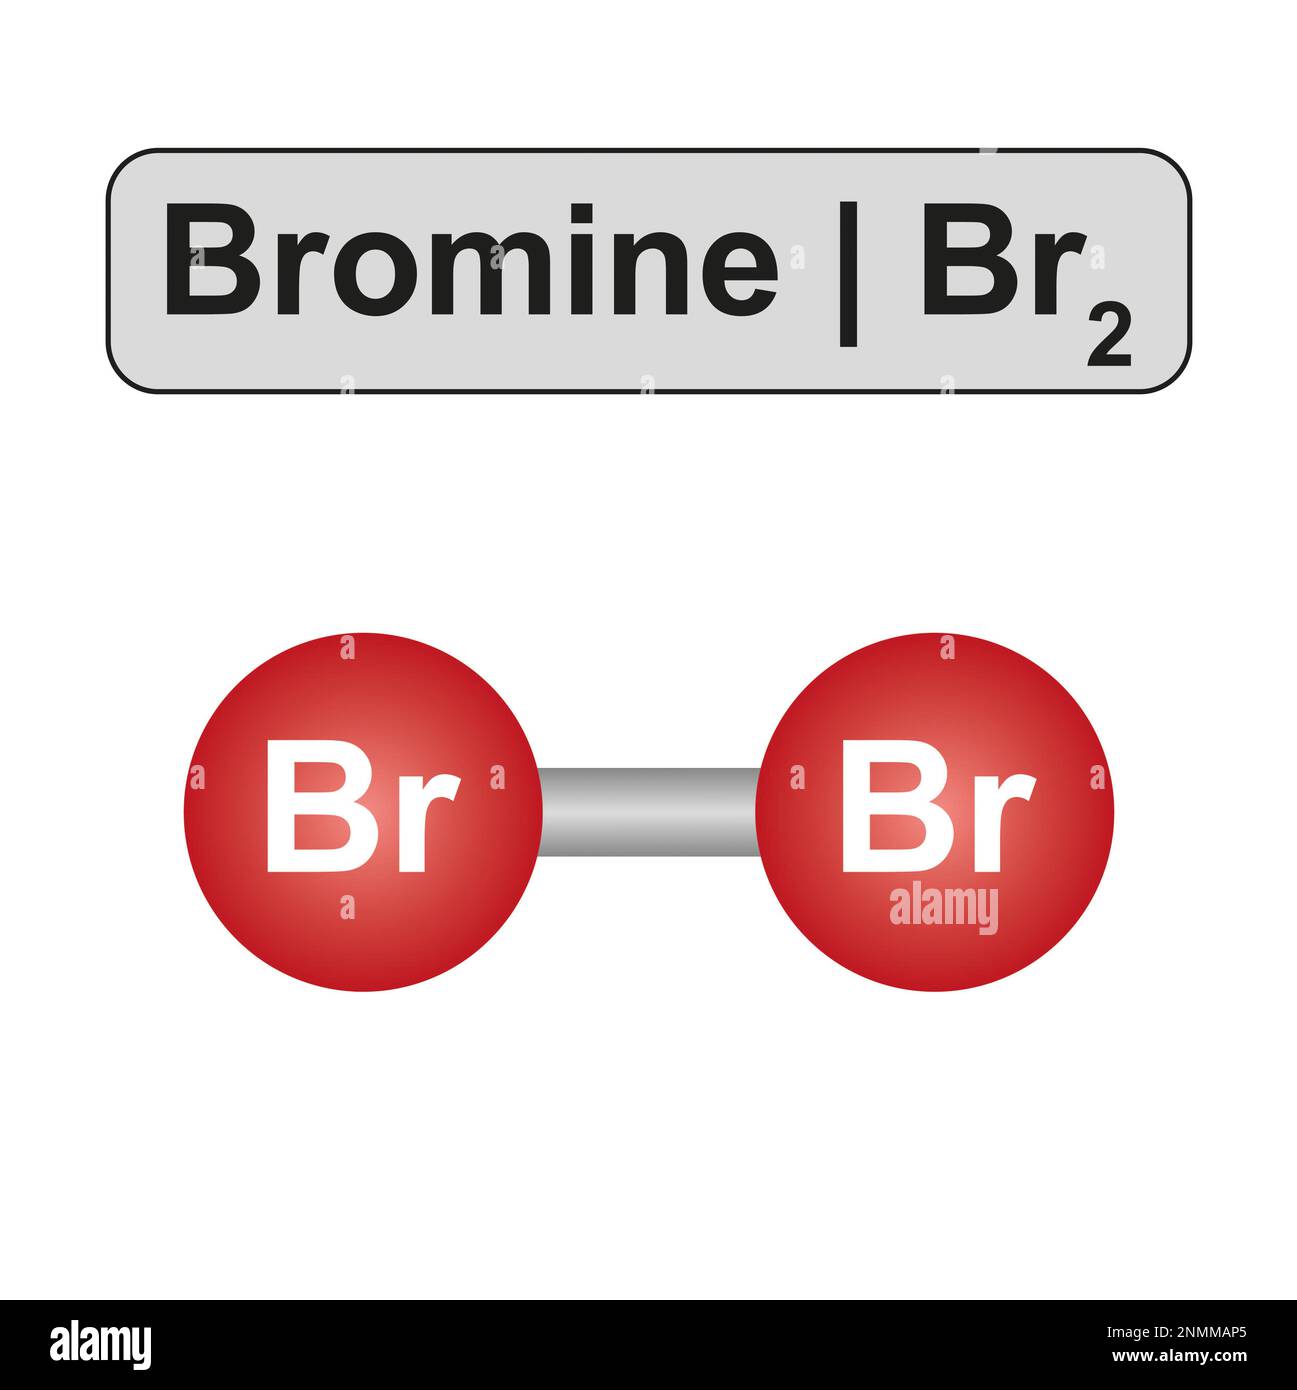 Bromine molecule, illustration Stock Photo